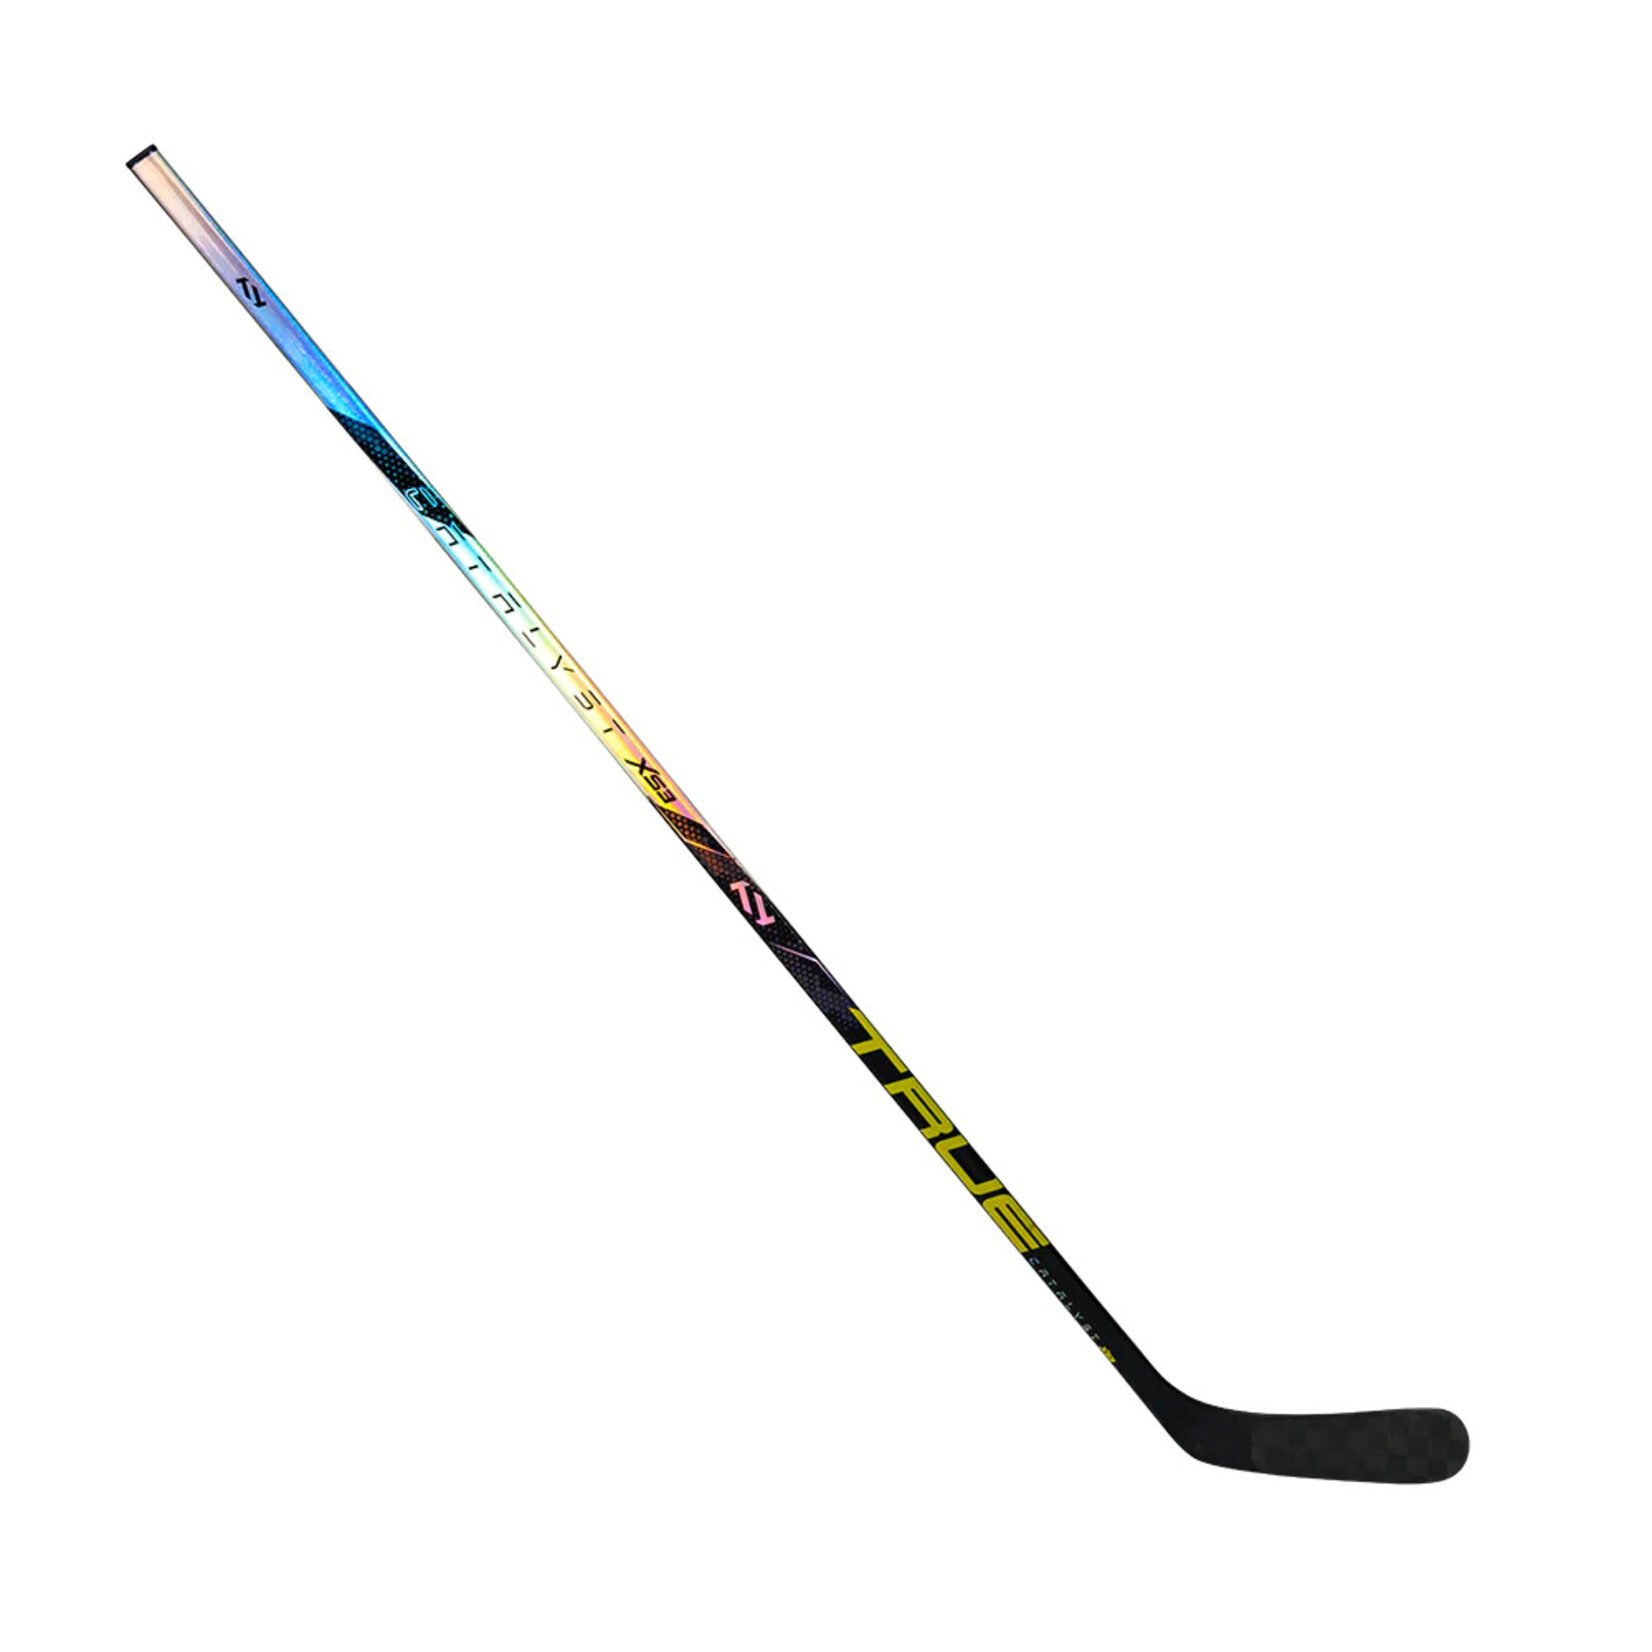 True Hockey True Hockey Stick, Catalyst XS3, Intermediate